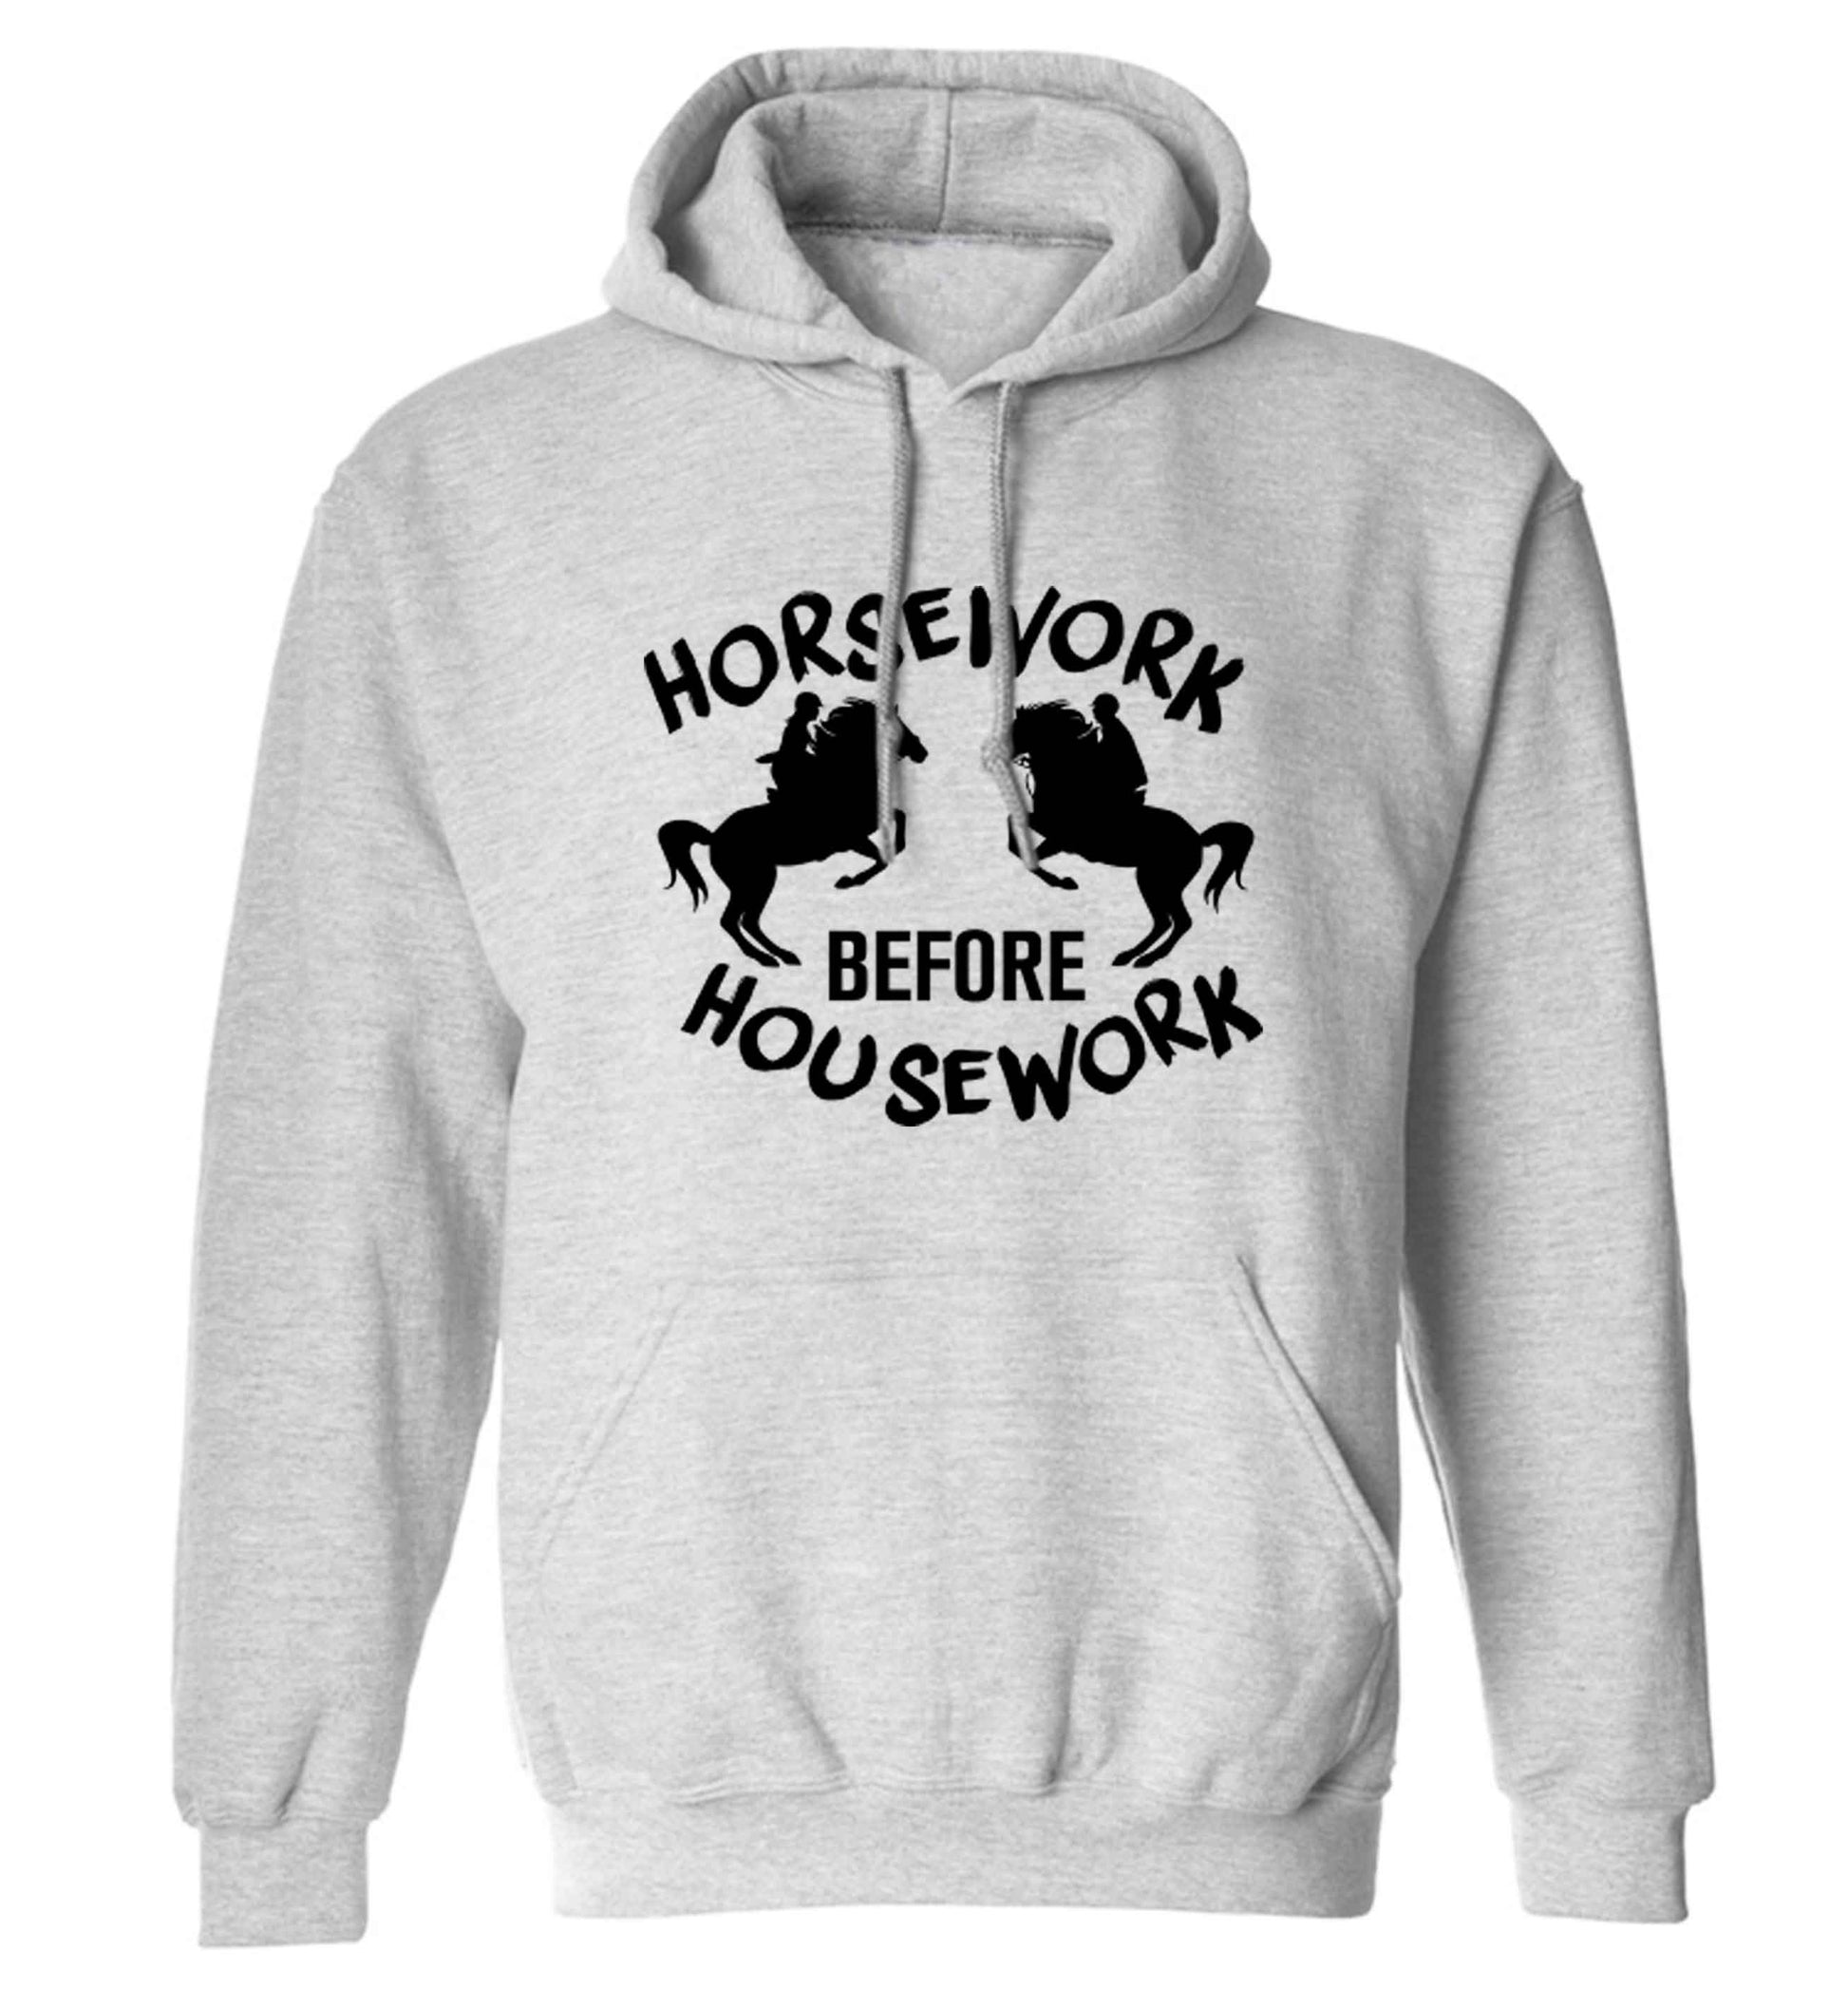 Horsework before housework adults unisex grey hoodie 2XL